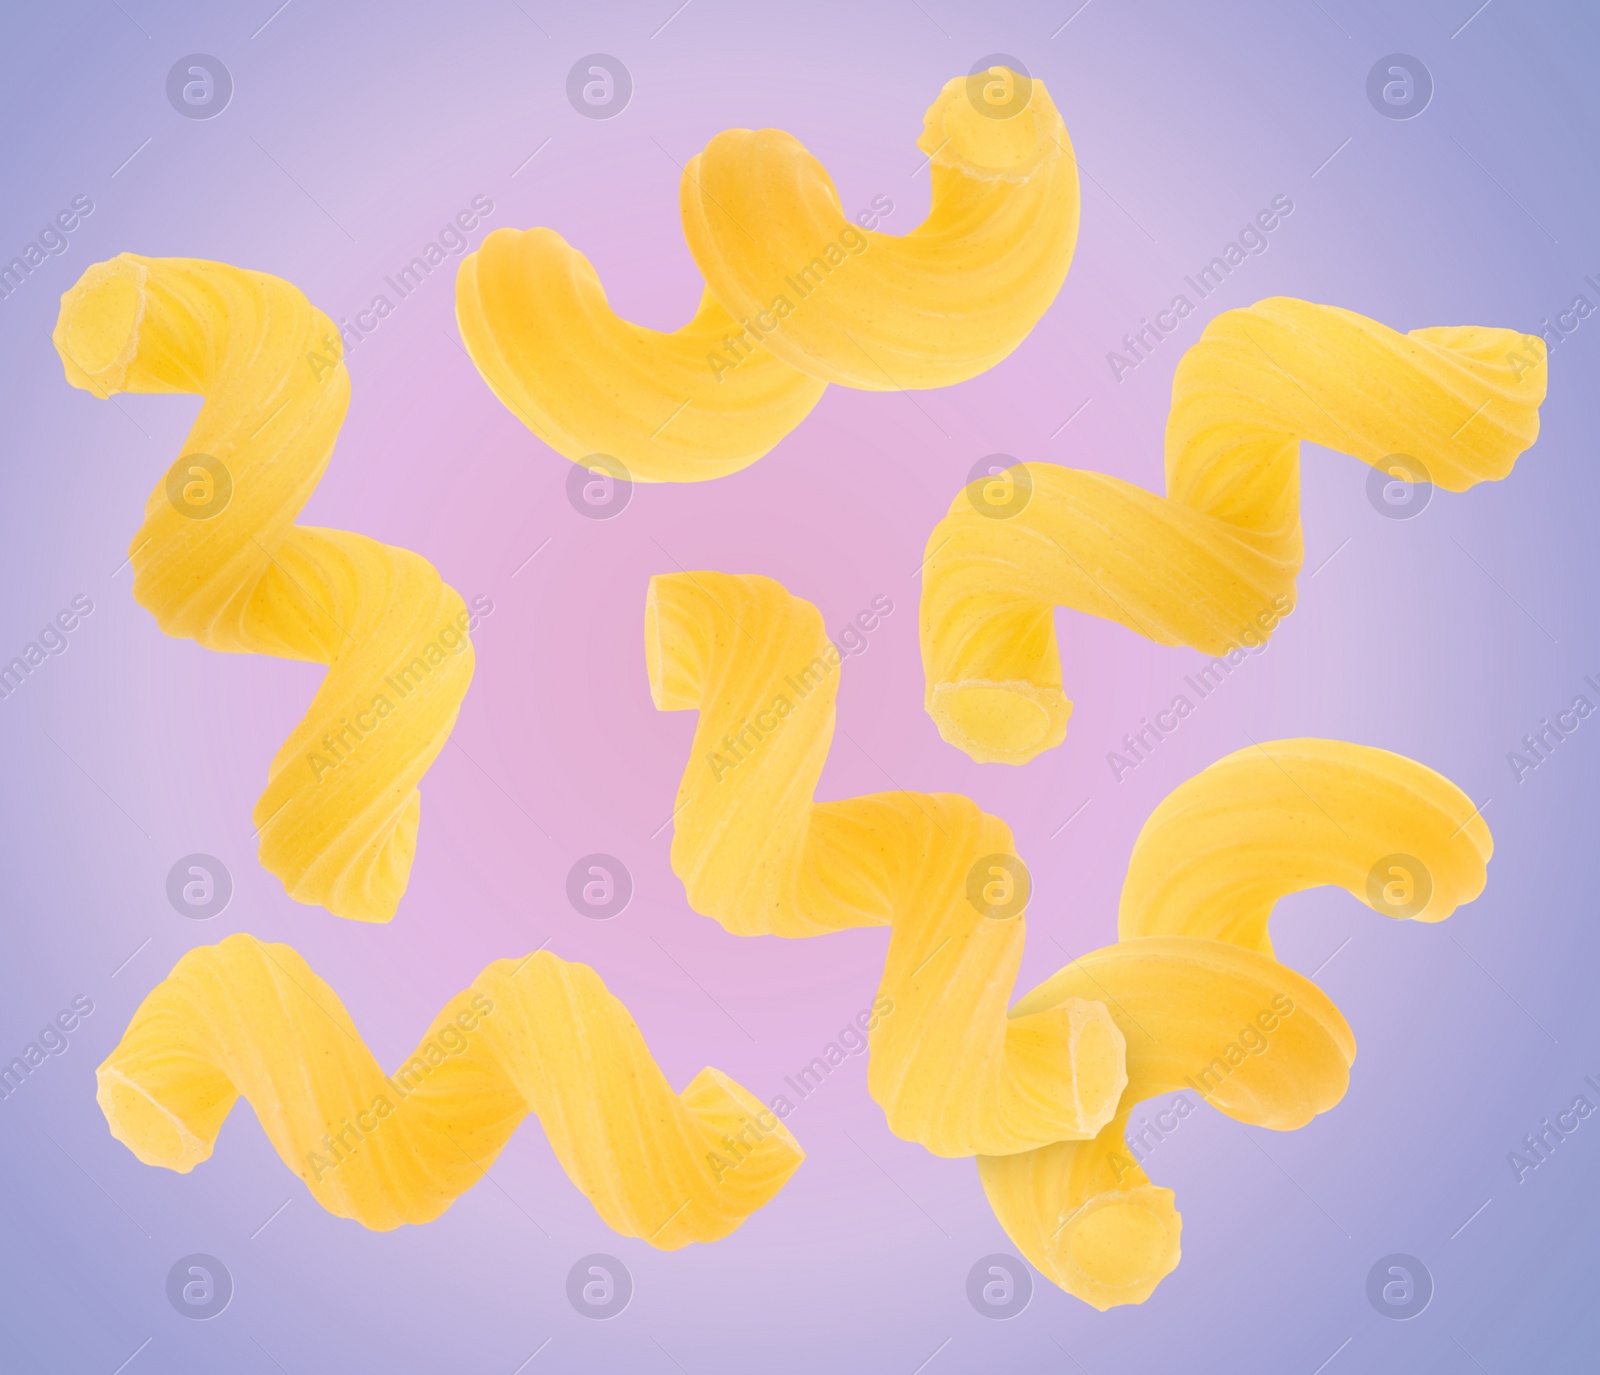 Image of Raw cavatappi pasta falling on color background